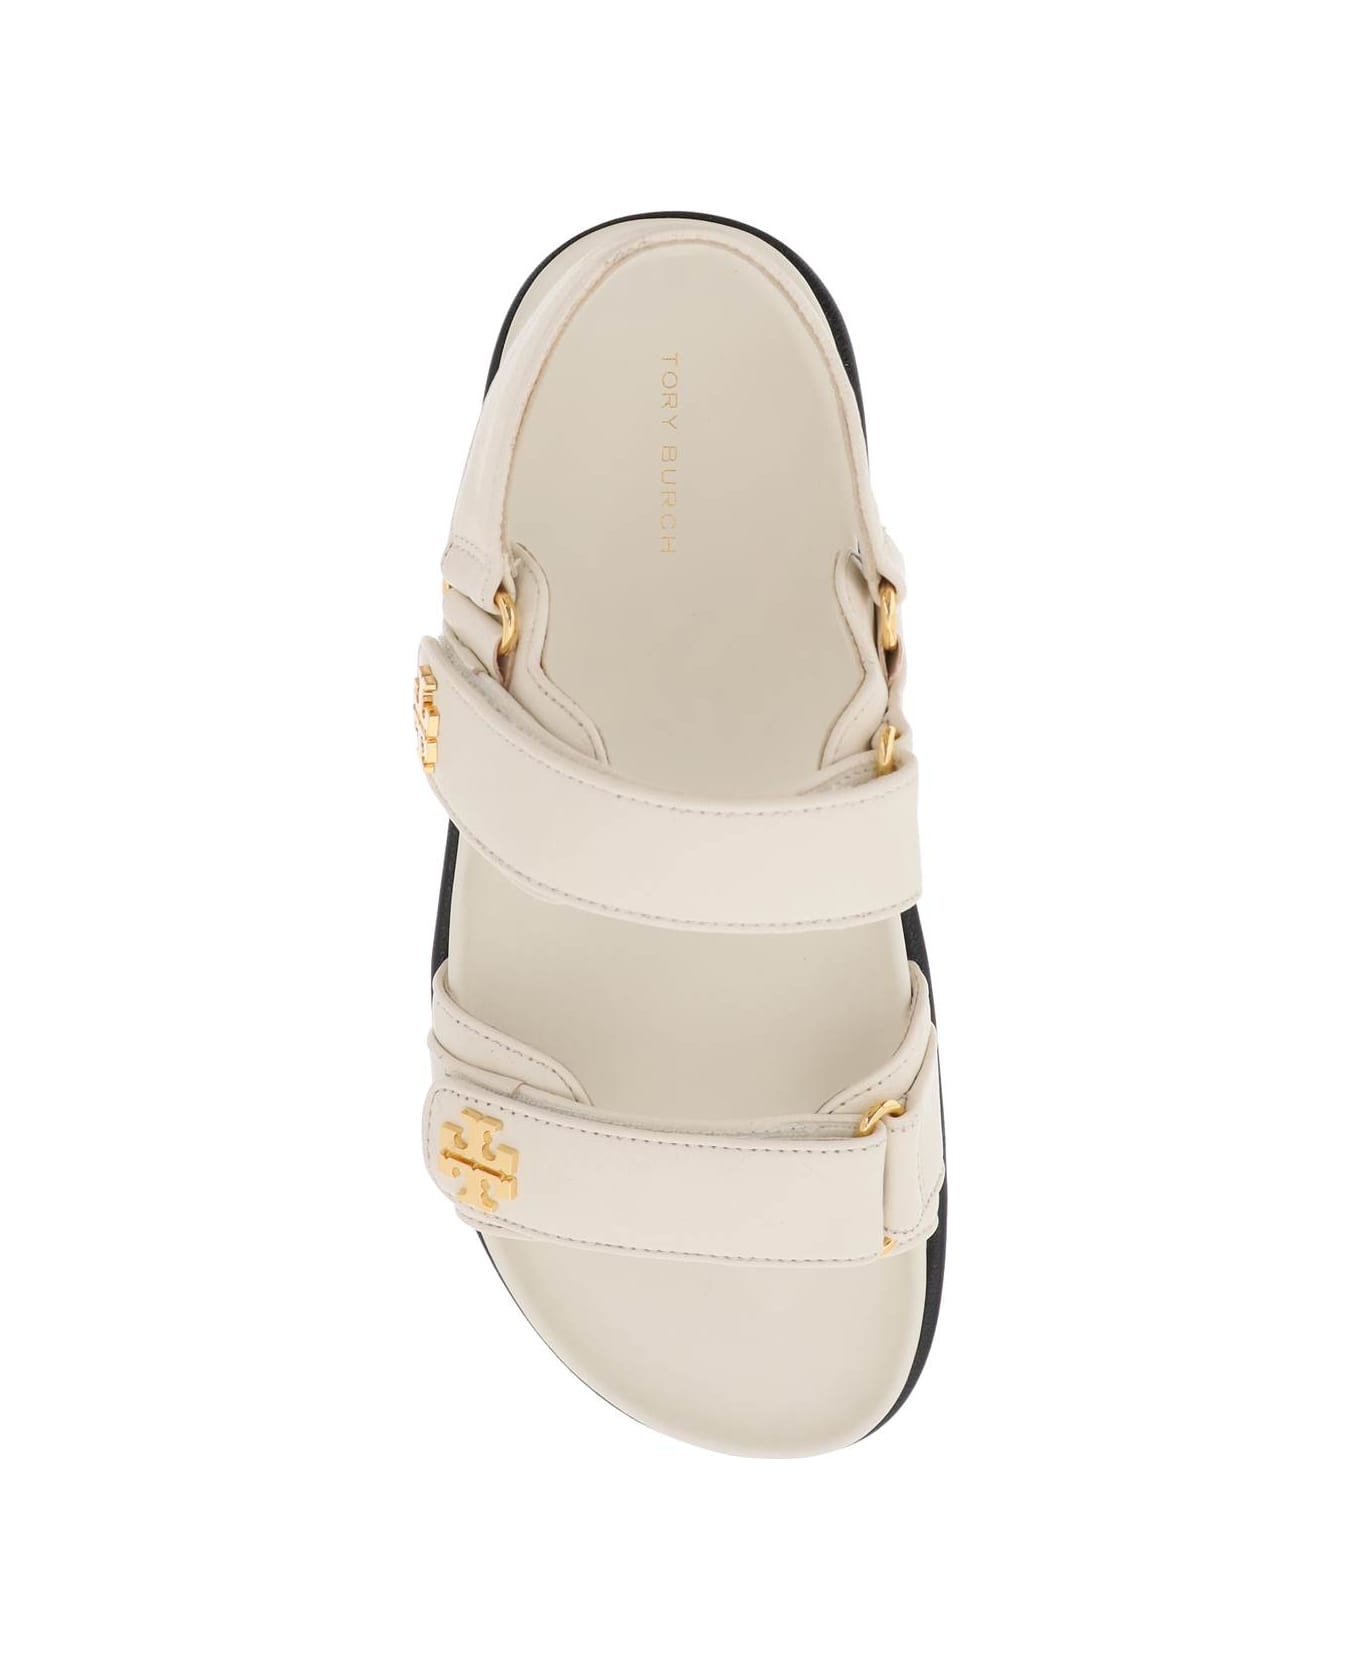 Tory Burch Kira Sport Sandals - NEW IVORY (White) サンダル